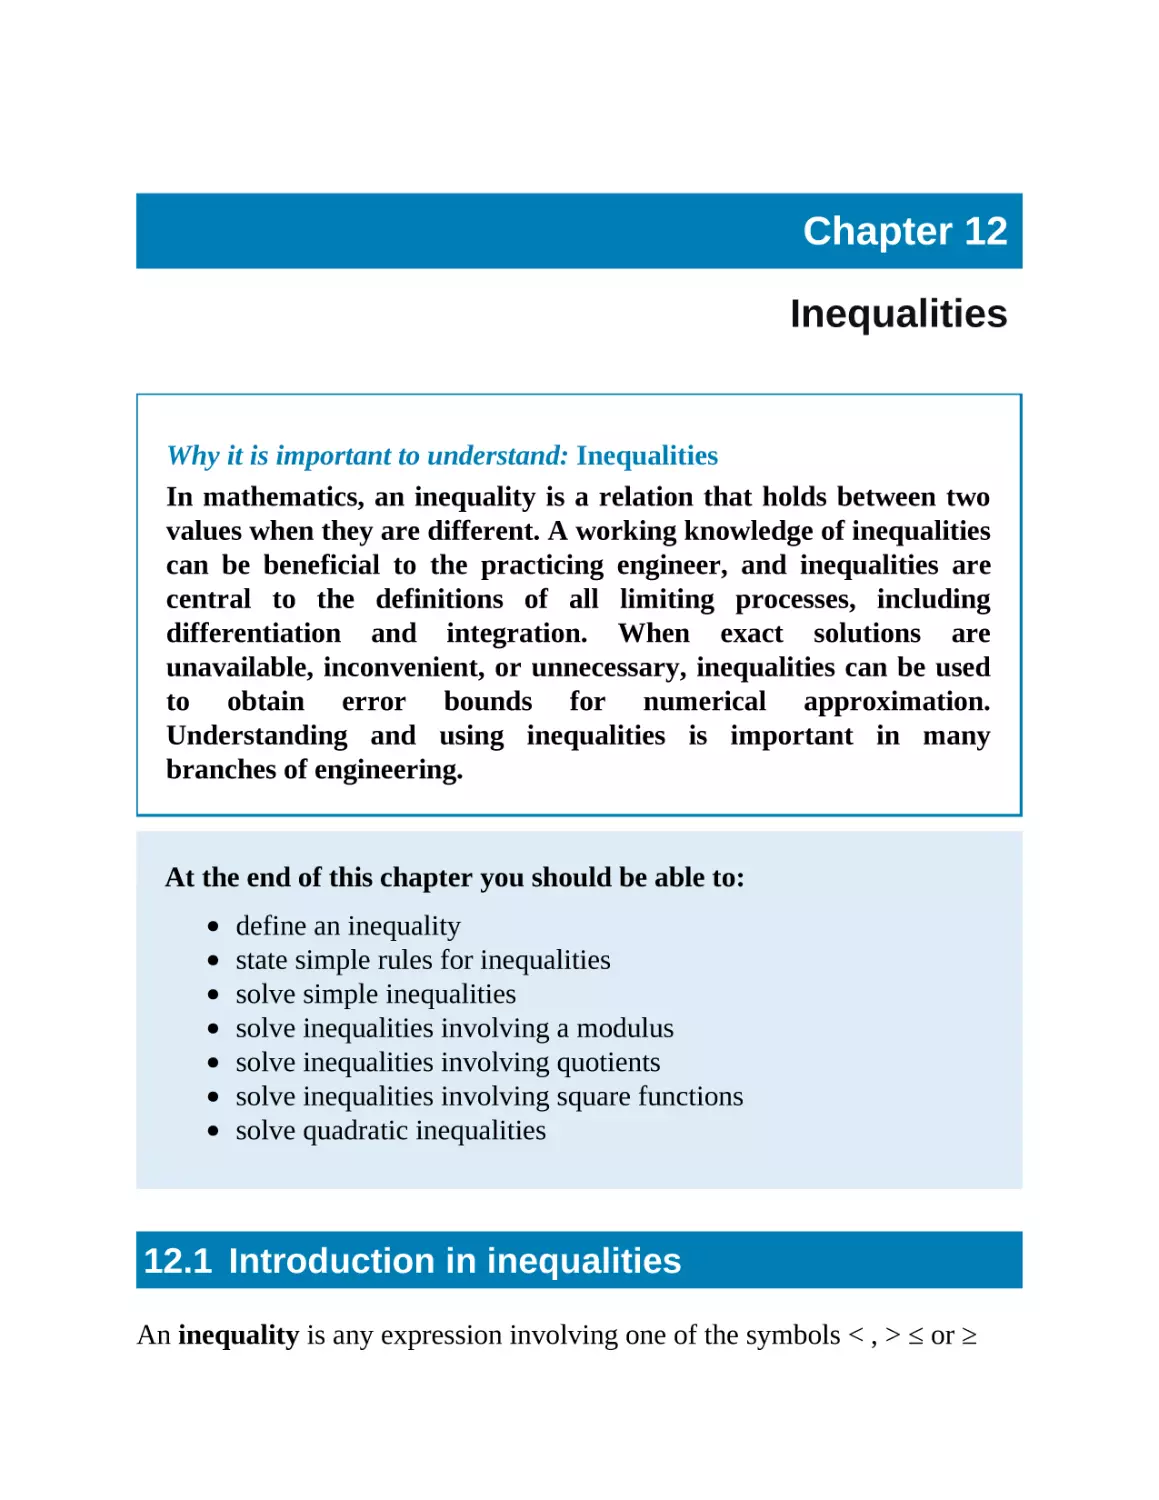 12 Inequalities
12.1 Introduction in inequalities